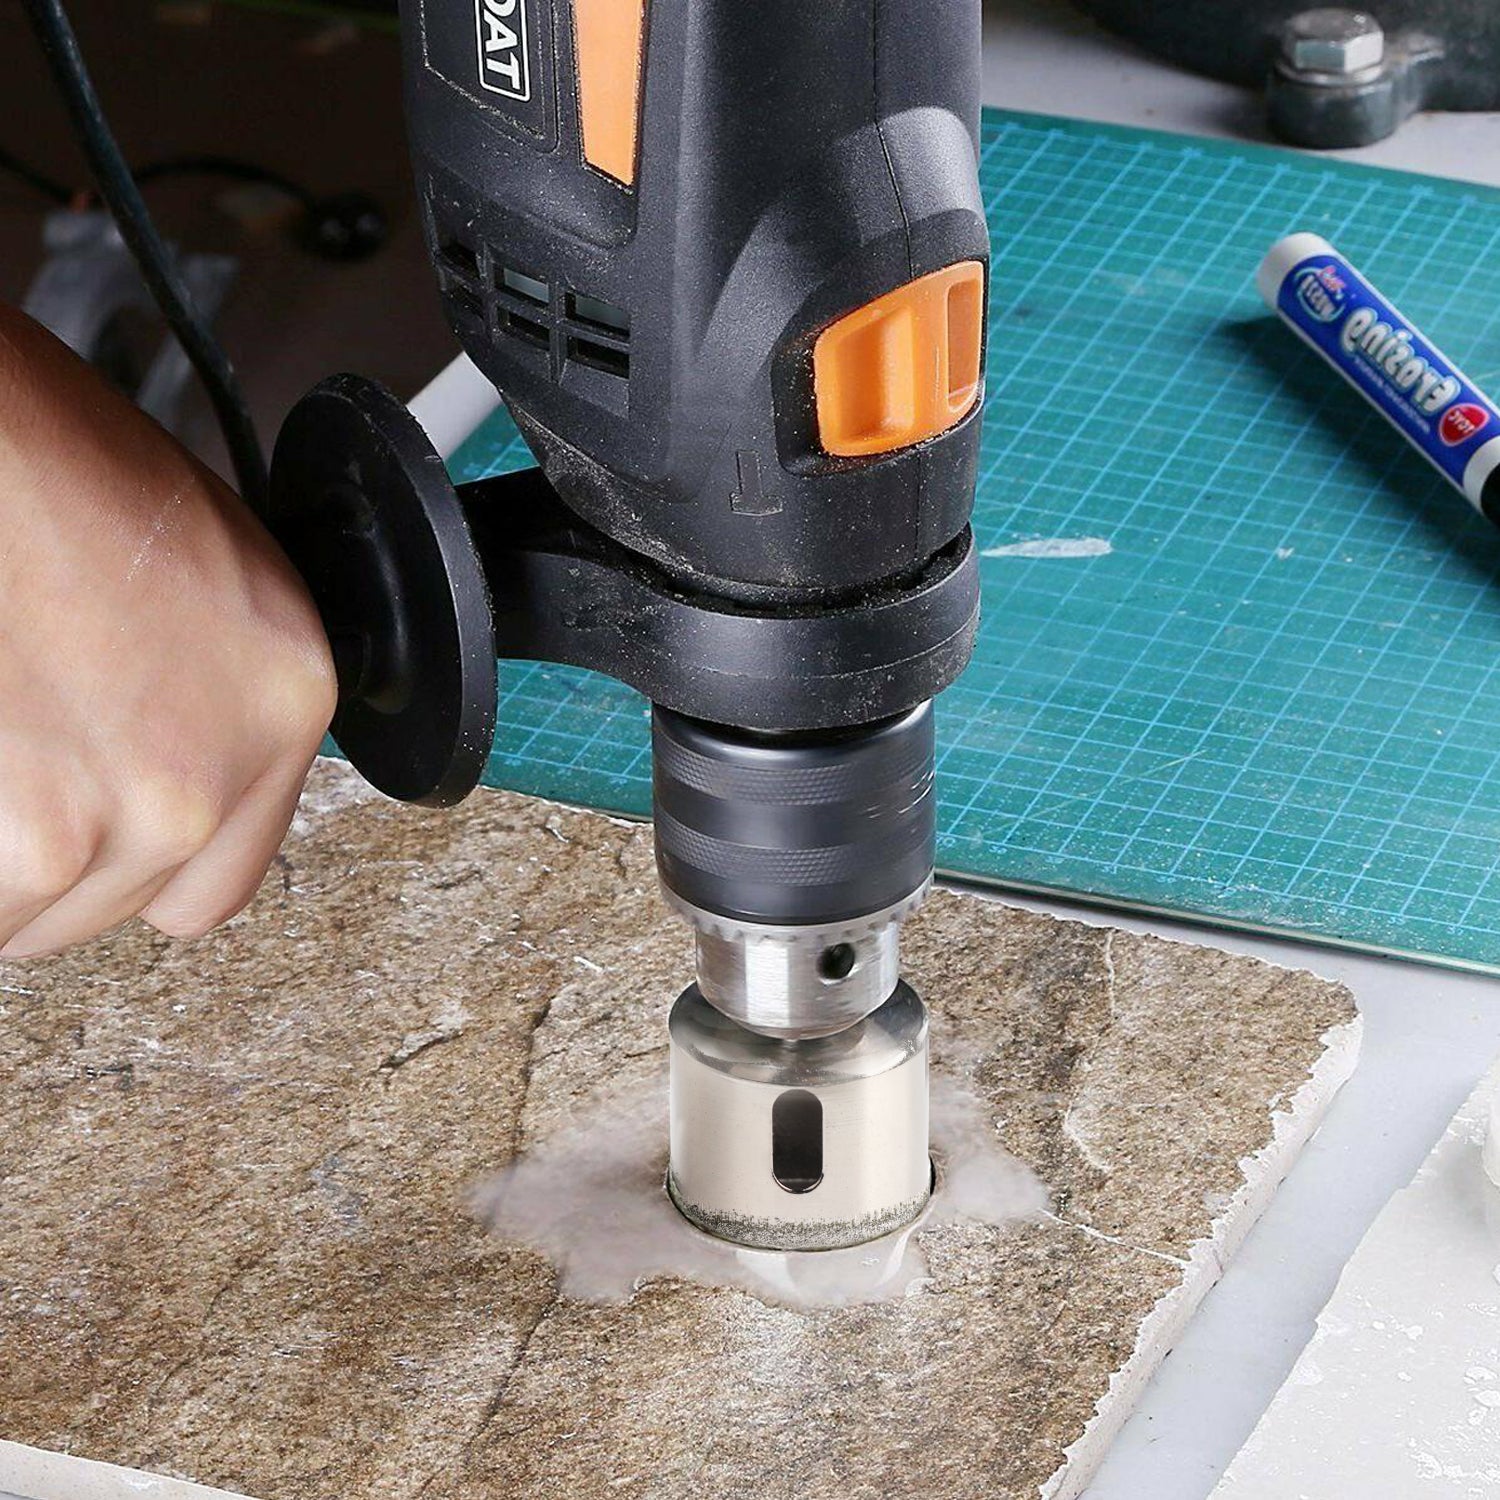 30mm Diamond Hole Saw Kit Tile Drill Bits for Ceramic, Glass, Tile, Porcelain, Marble, Granite